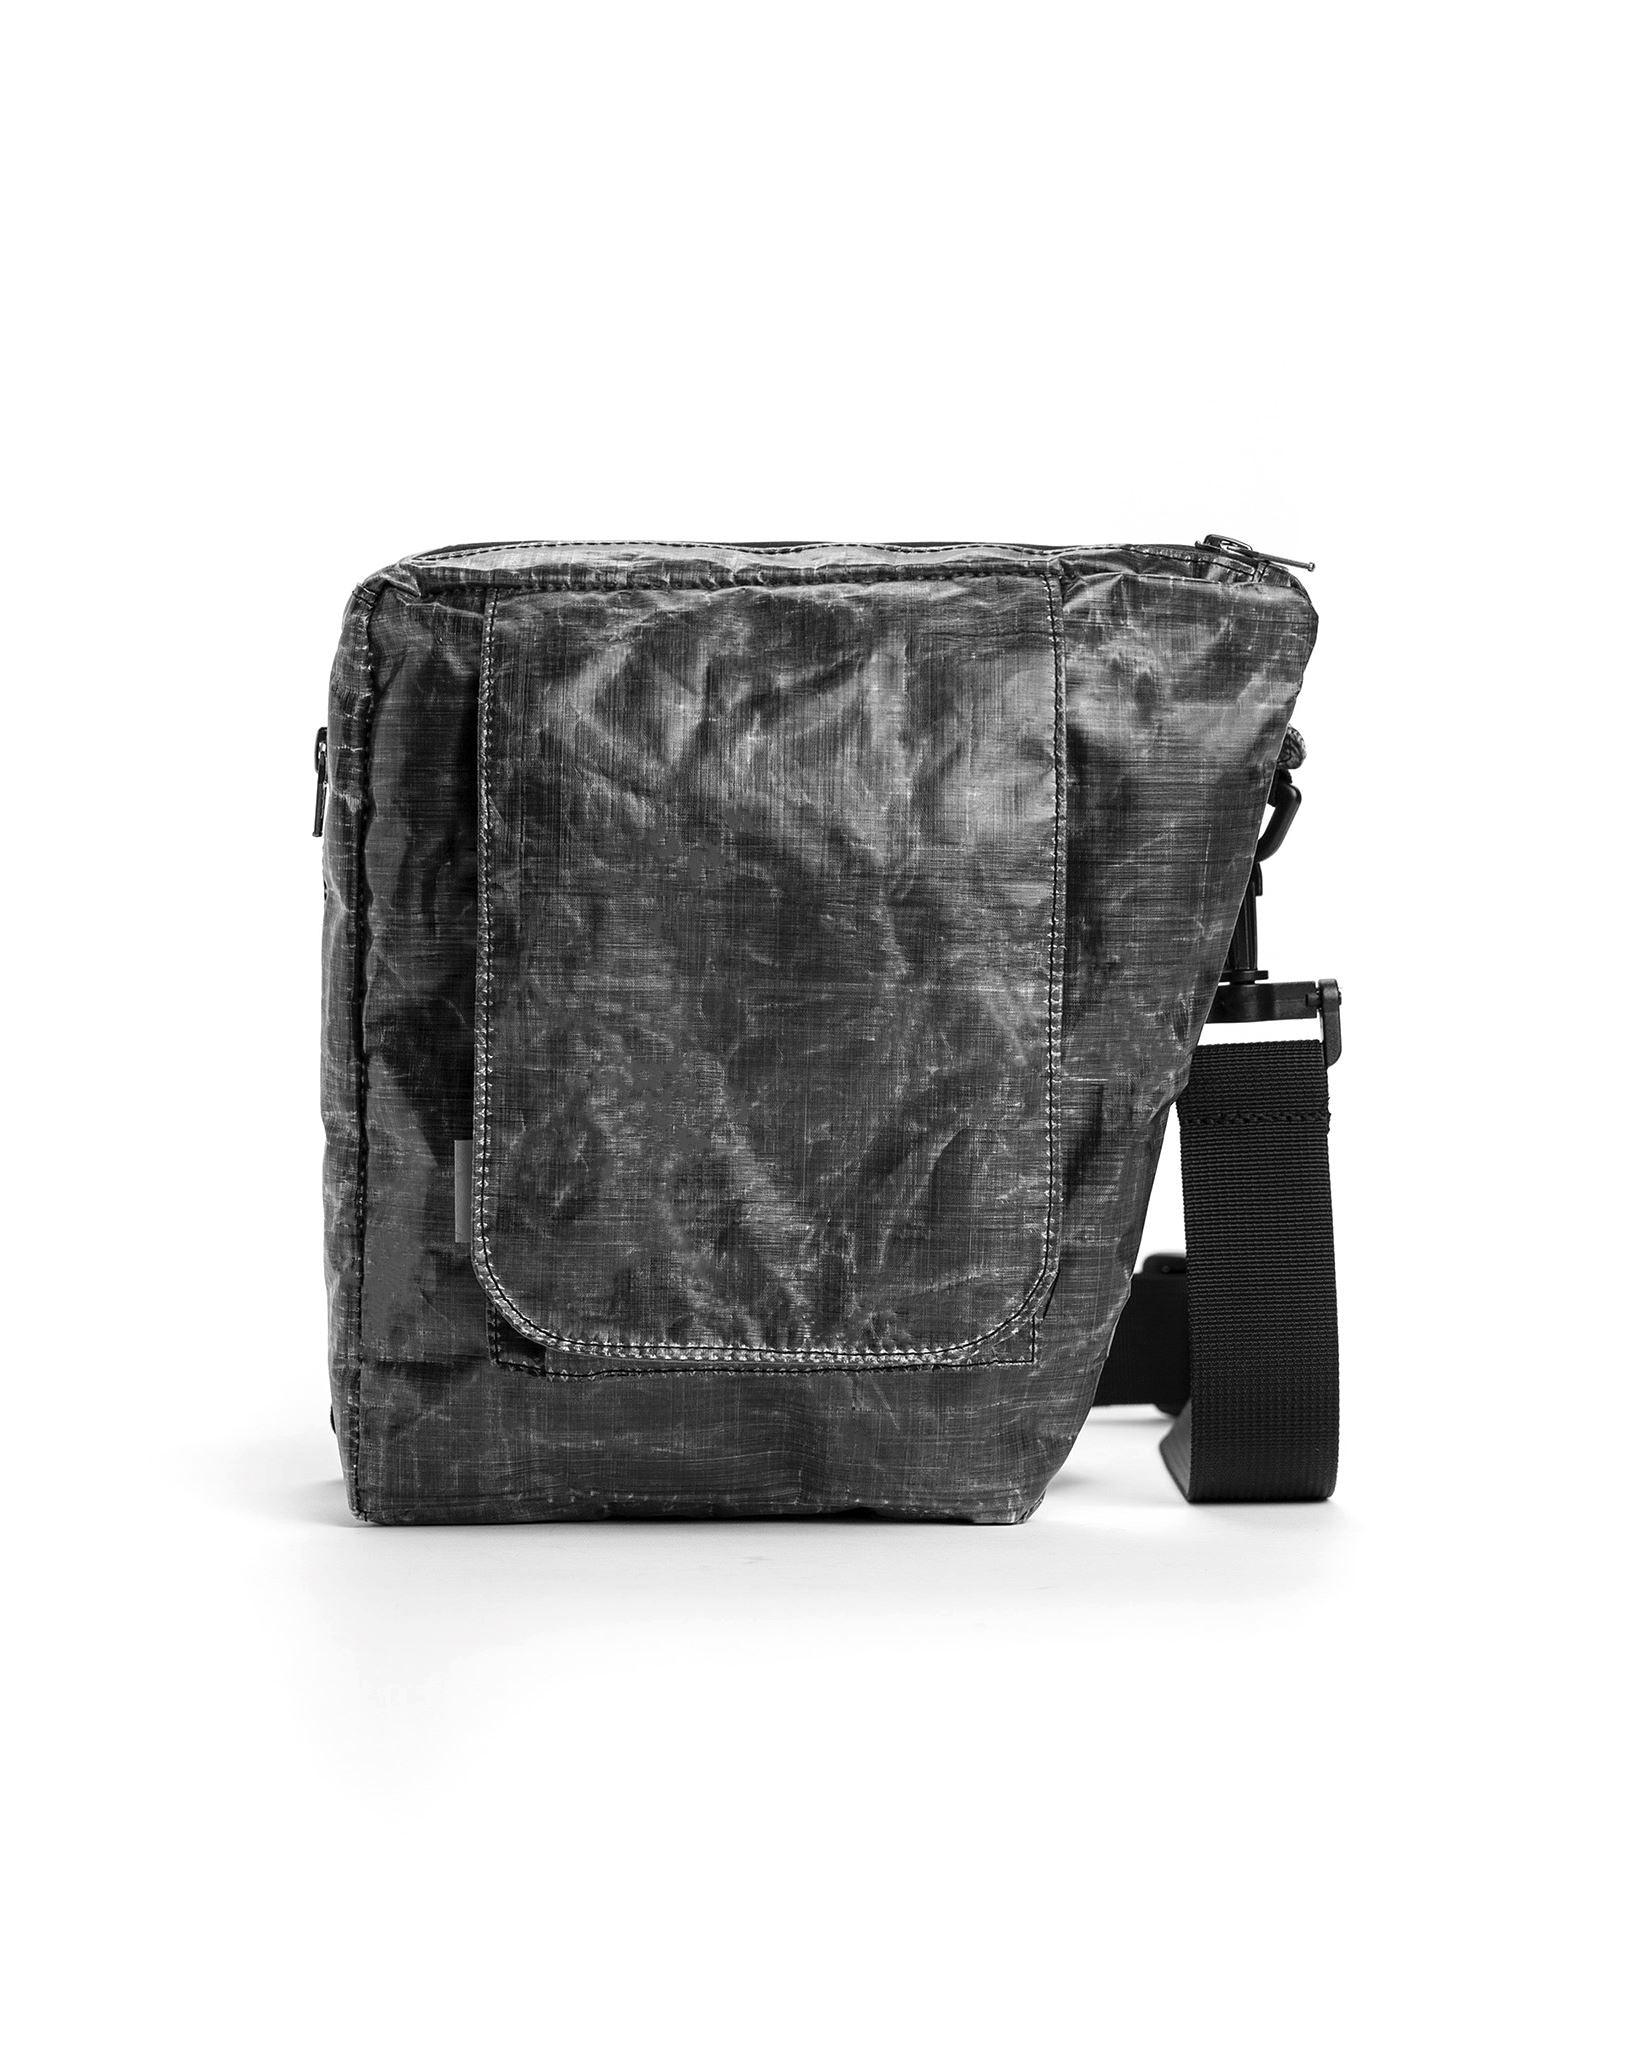 Small Carry - Black Dyneema Bag bolstr Black Lefty 